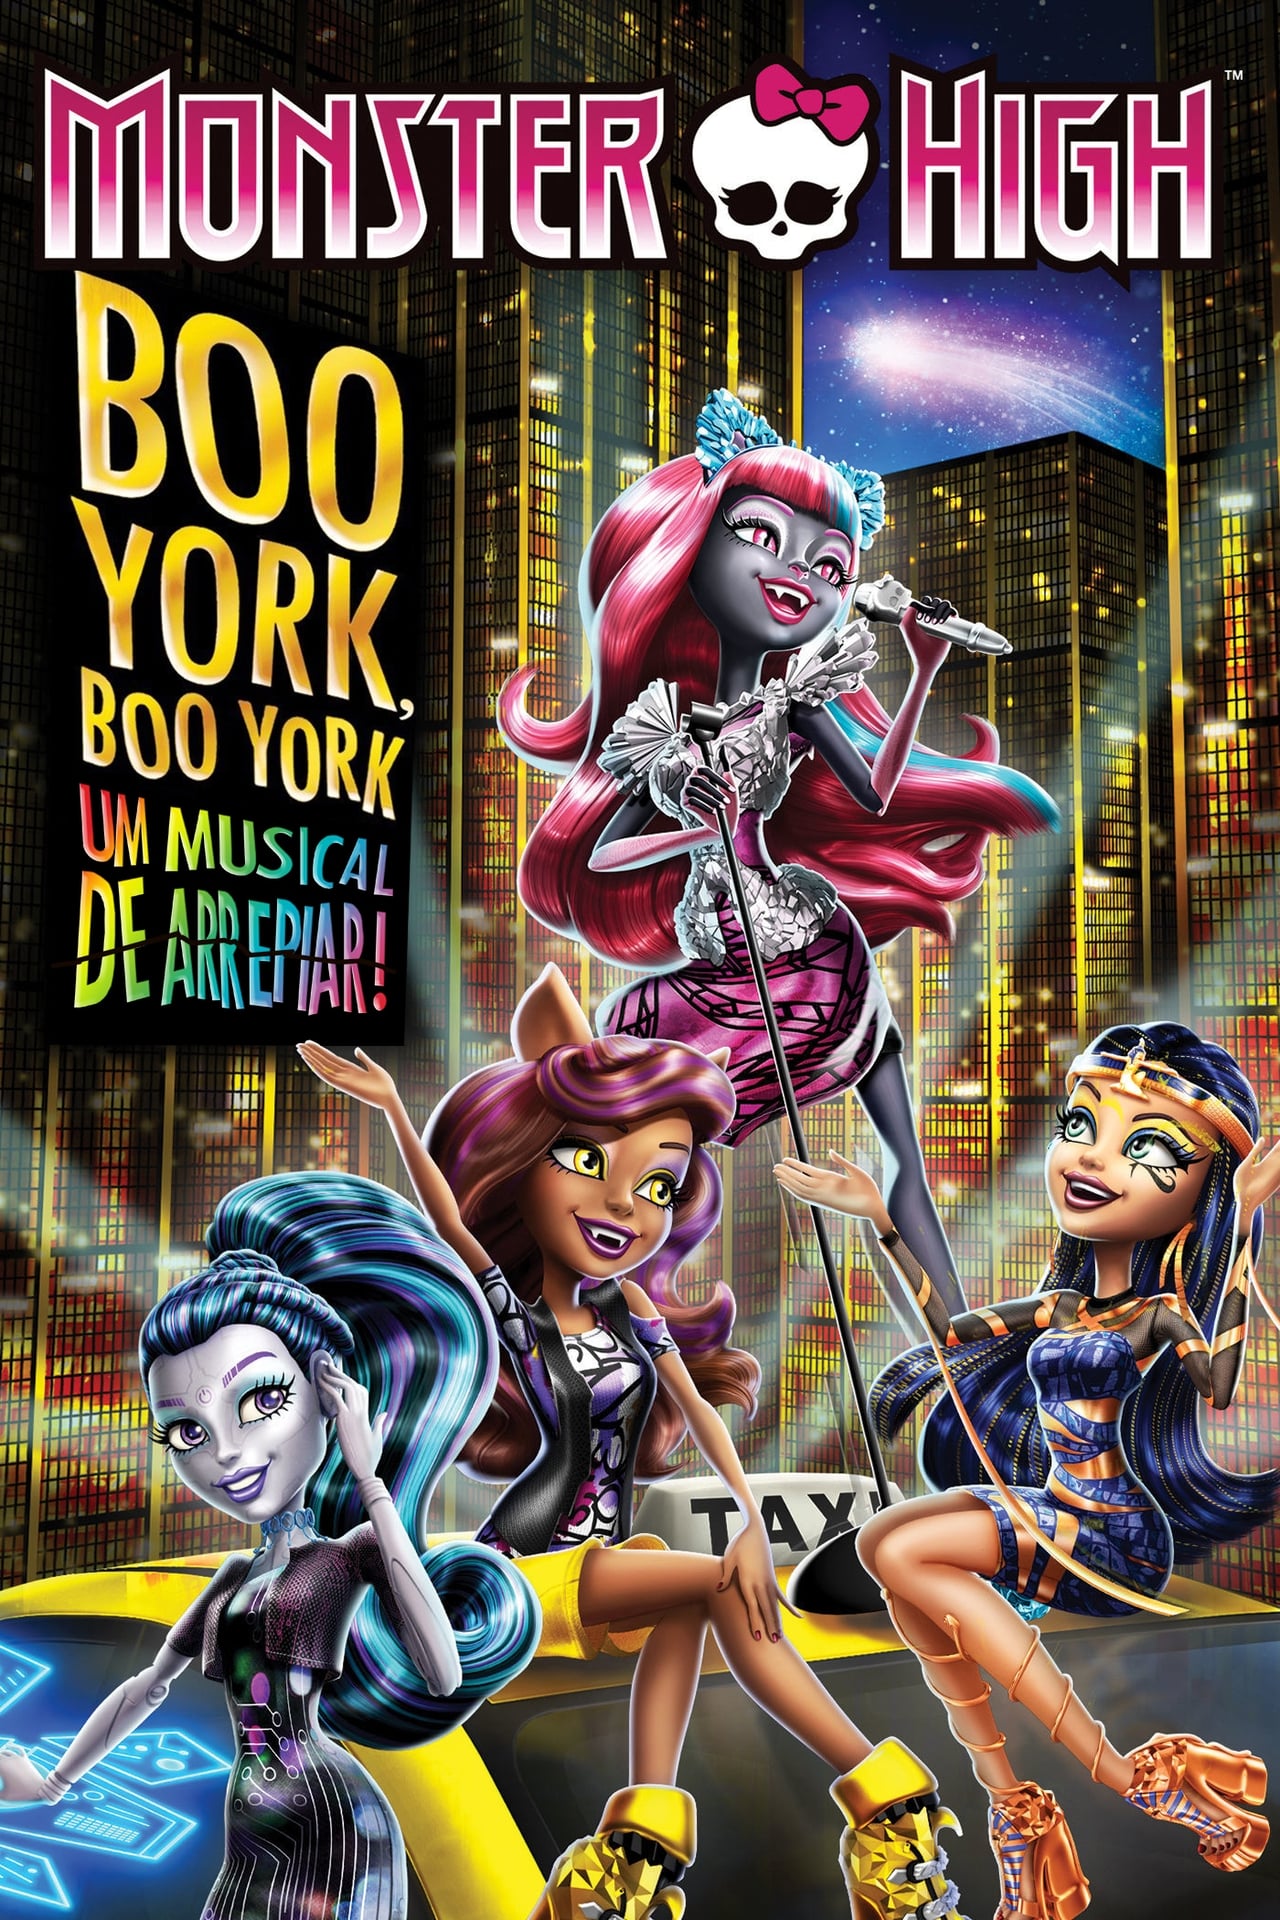 Monster High: Boo York, Boo York Dublado Online